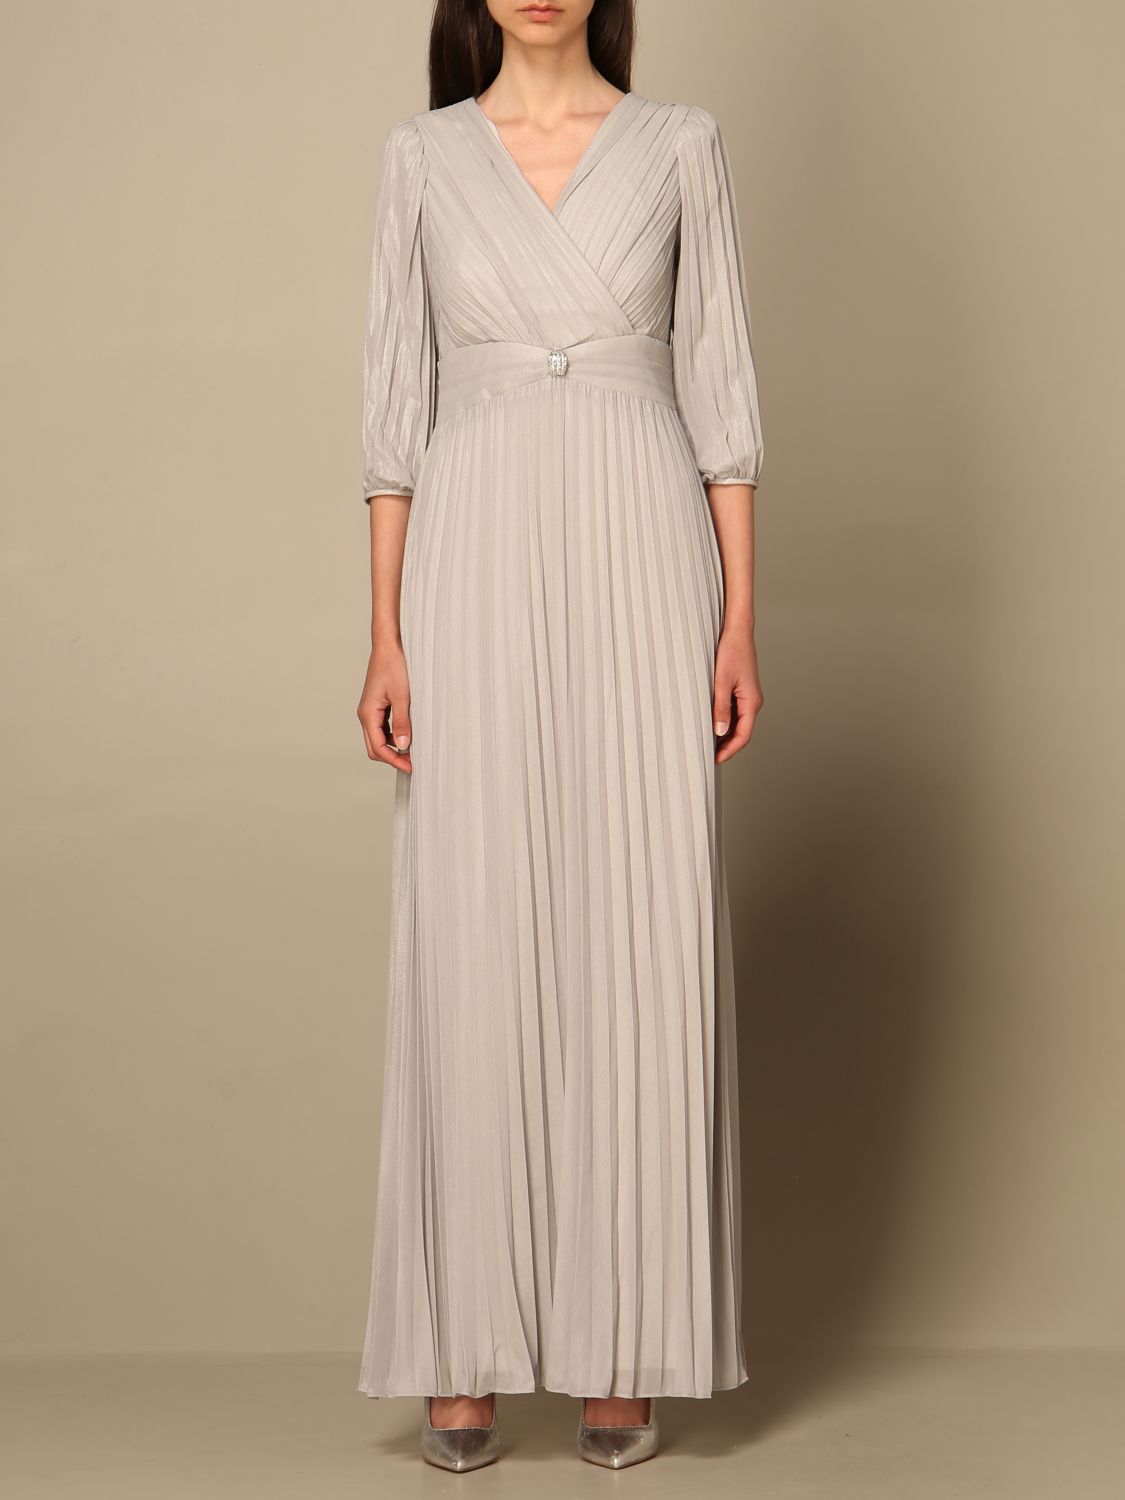 Ralph Lauren Outlet: dress for woman Silver | Lauren Ralph Lauren dress 253830257 on GIGLIO.COM